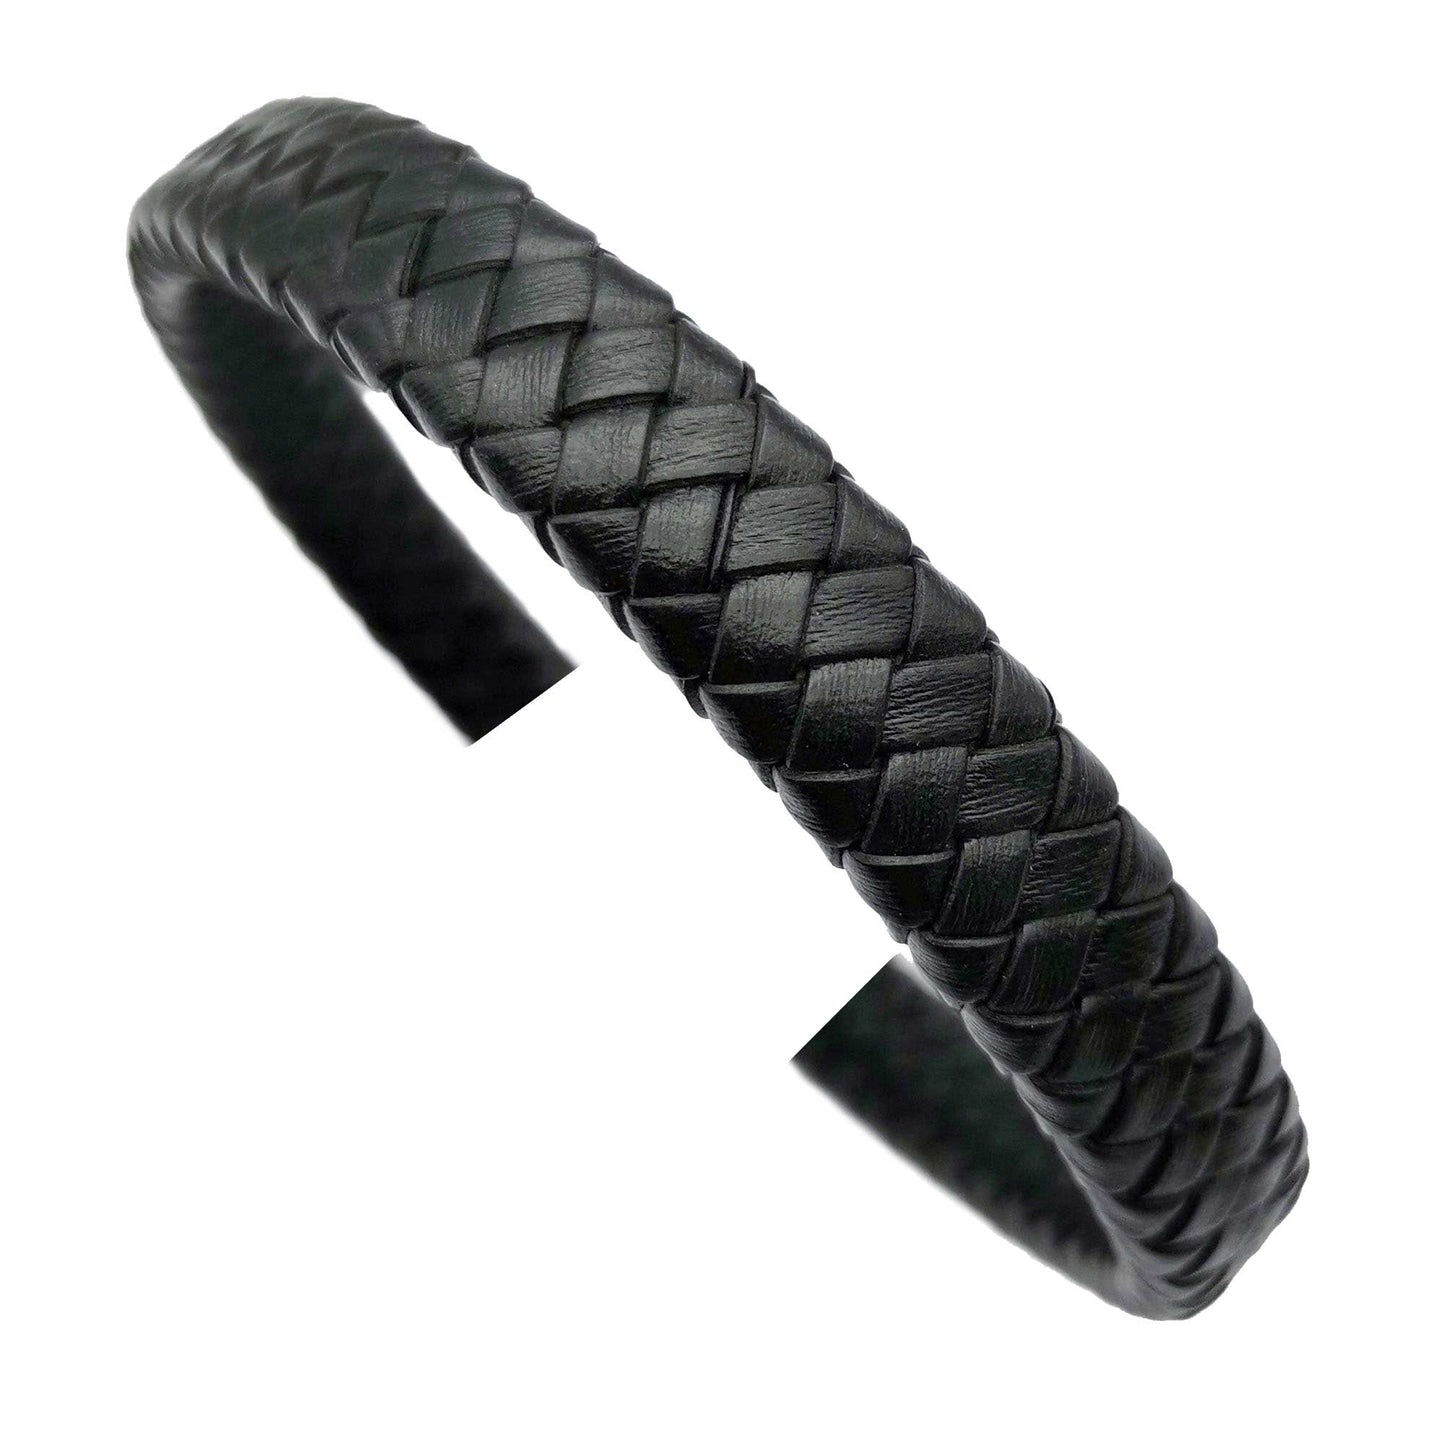 shapesbyX-12x6mm Braided Leather Strap Braid Bracelet Making Leather Cord 12mmx6mm